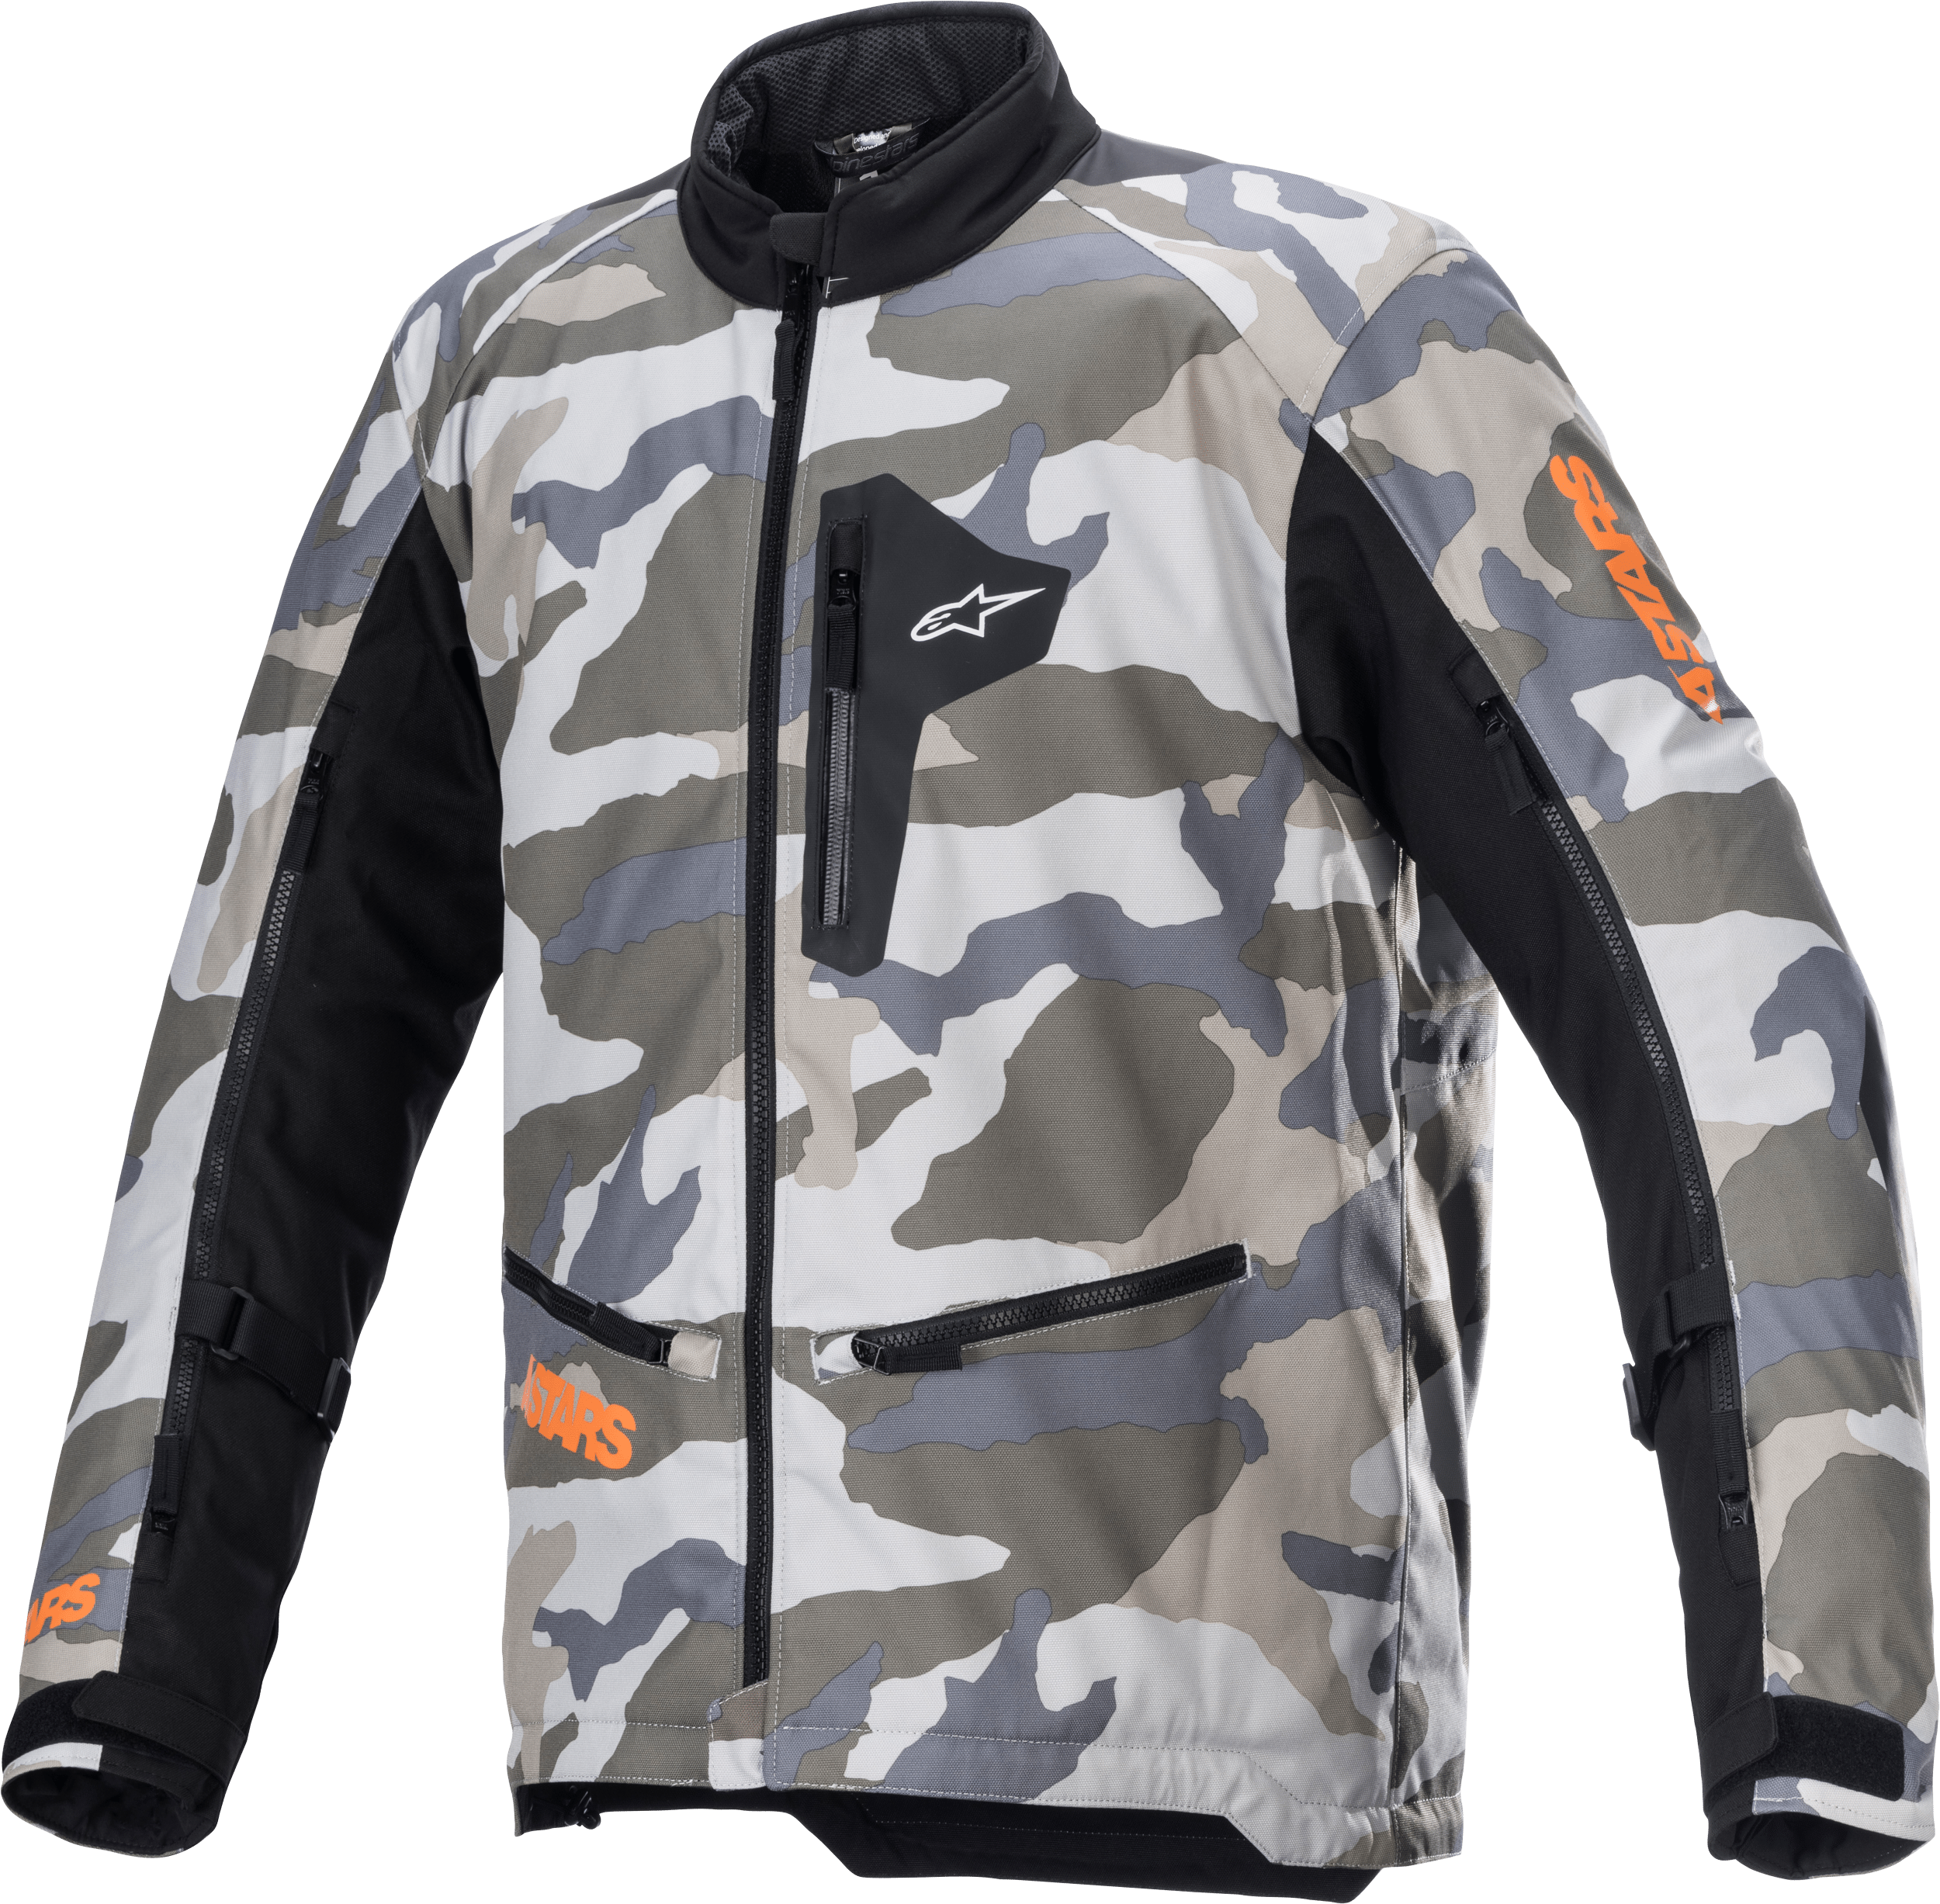 Western Powersports Jacket Mojave Camo/Orange / 2X Venture Xt Jacket By Alpinestars 3303022-824-2XL